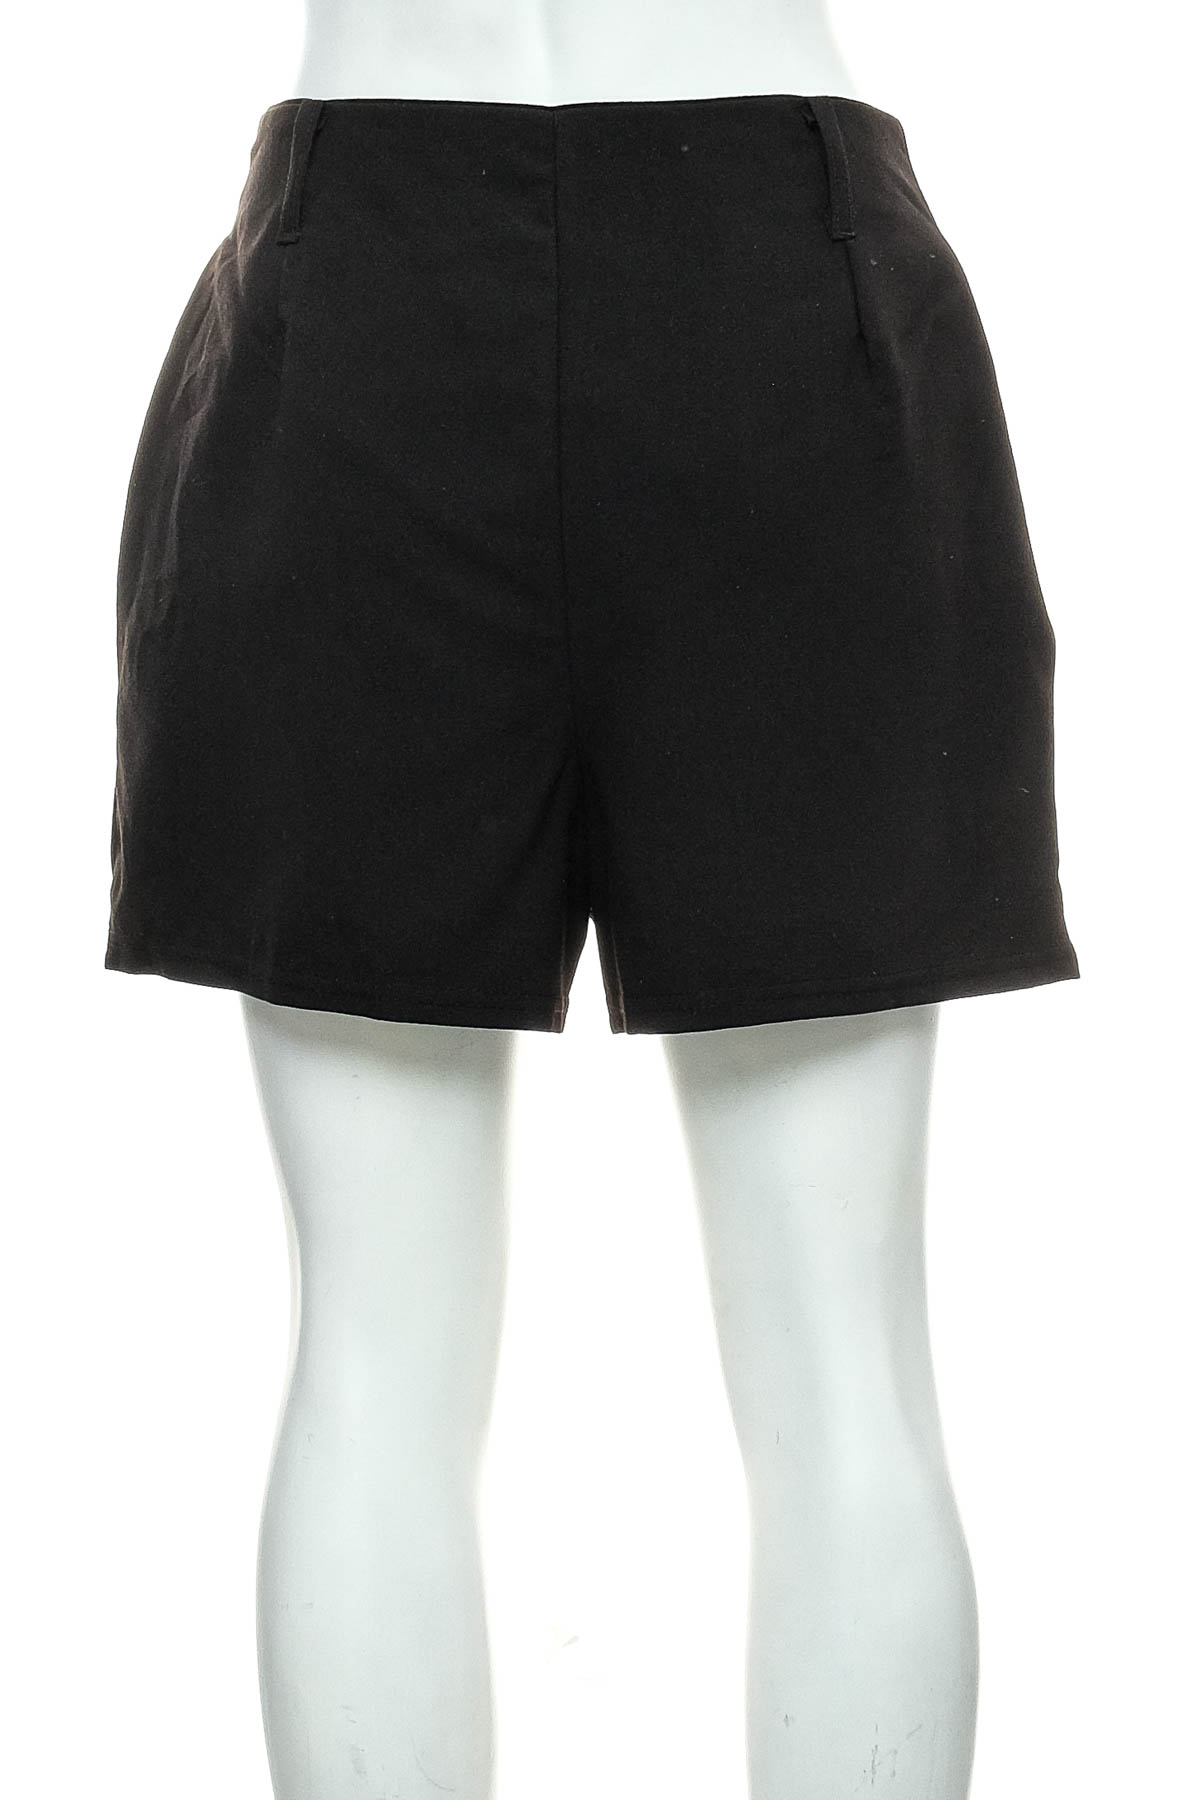 Female shorts - Boohoo - 1